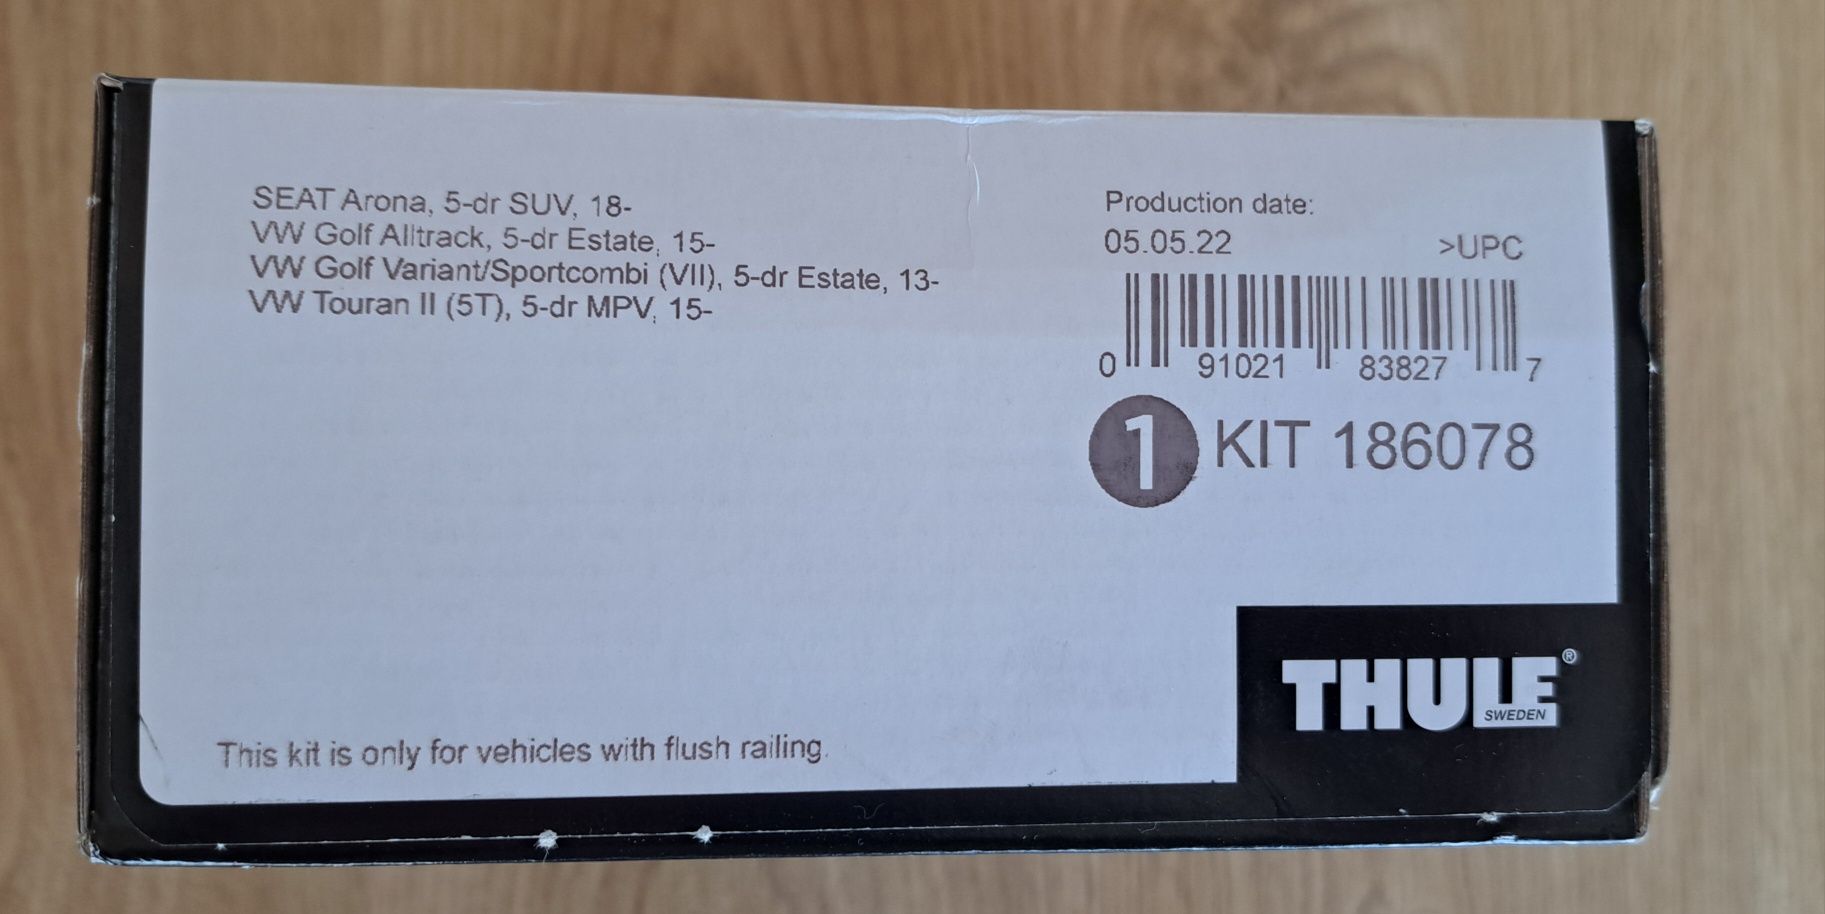 THULE Kit 186078 - VW Golf 7, Seat Arona